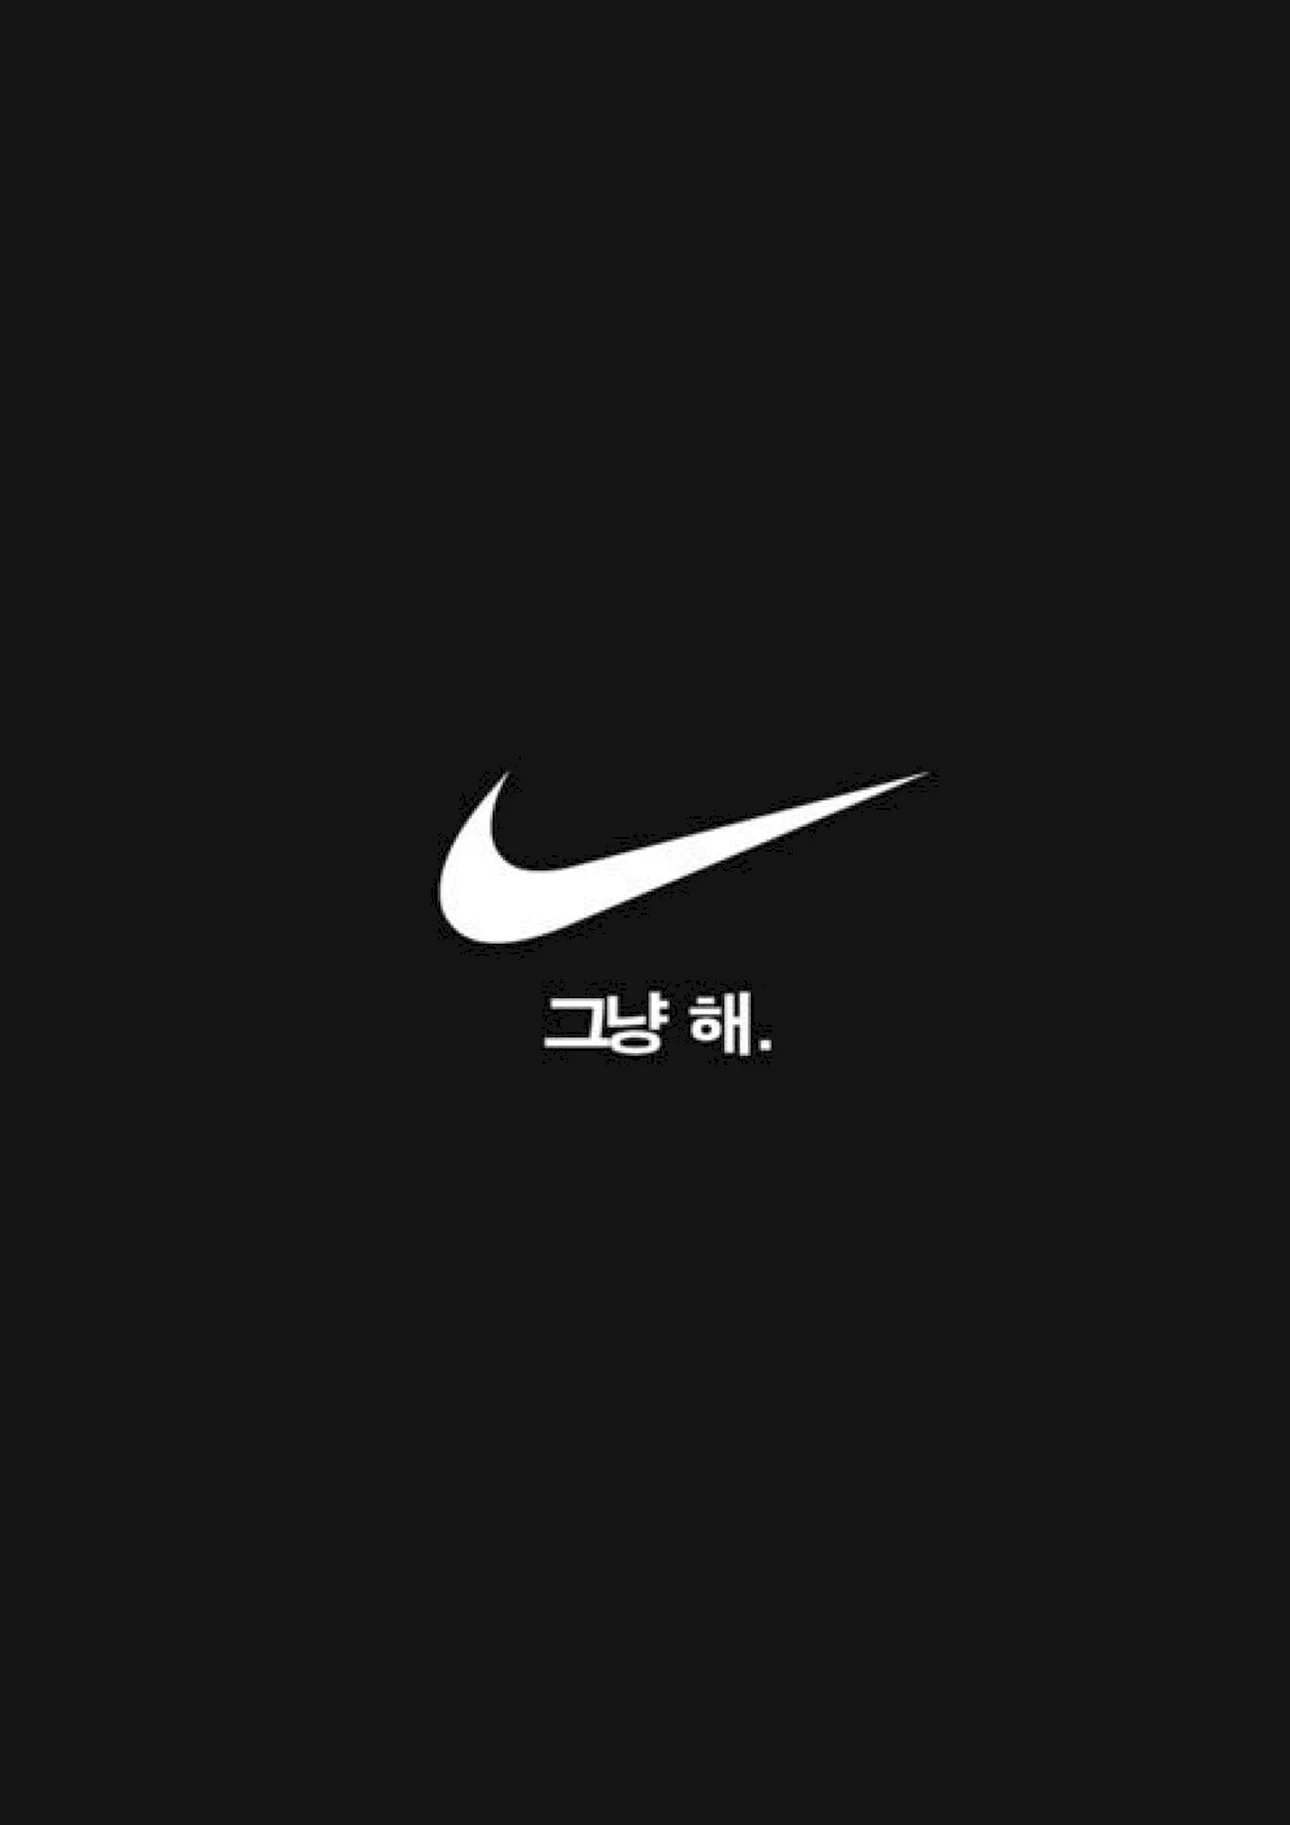 Japan Nike Logo Wallpaper For iPhone